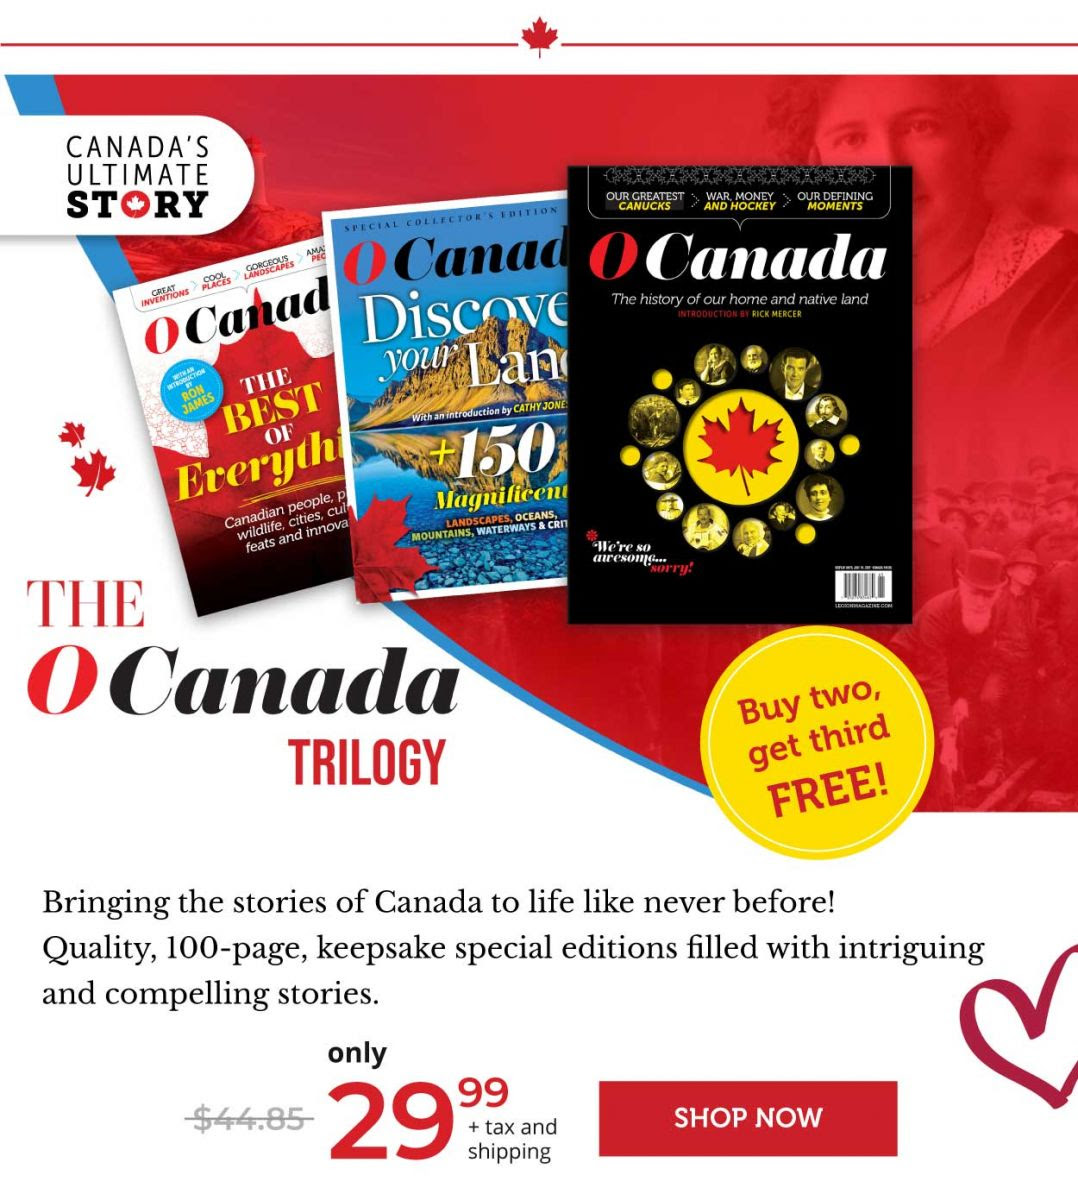 The O Canada Trilogy